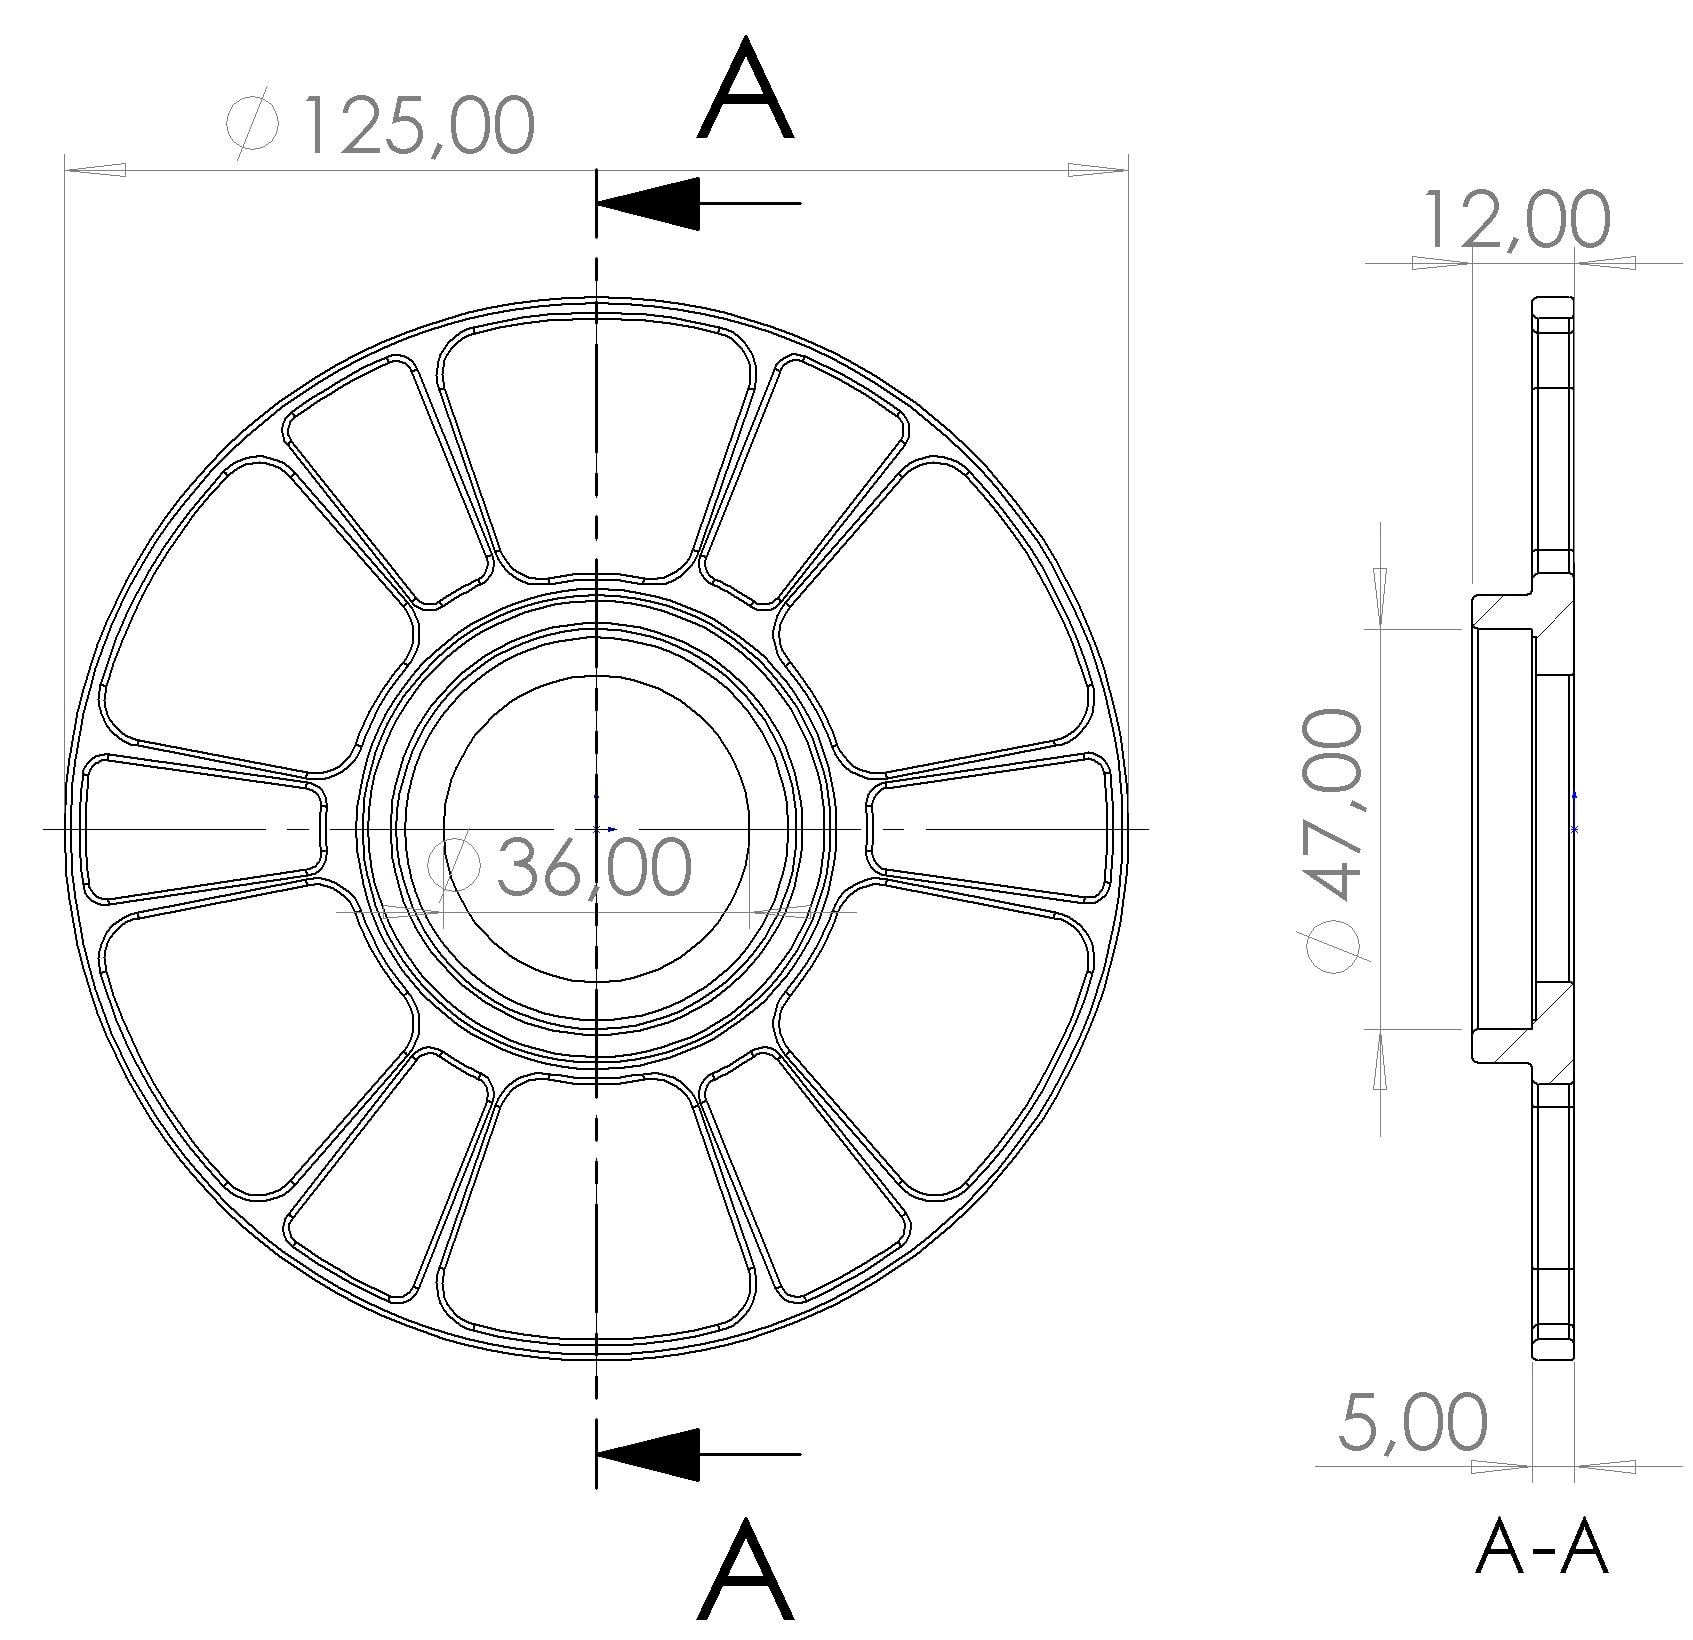 construction magnet wheel Hall Sensor Movement Detection